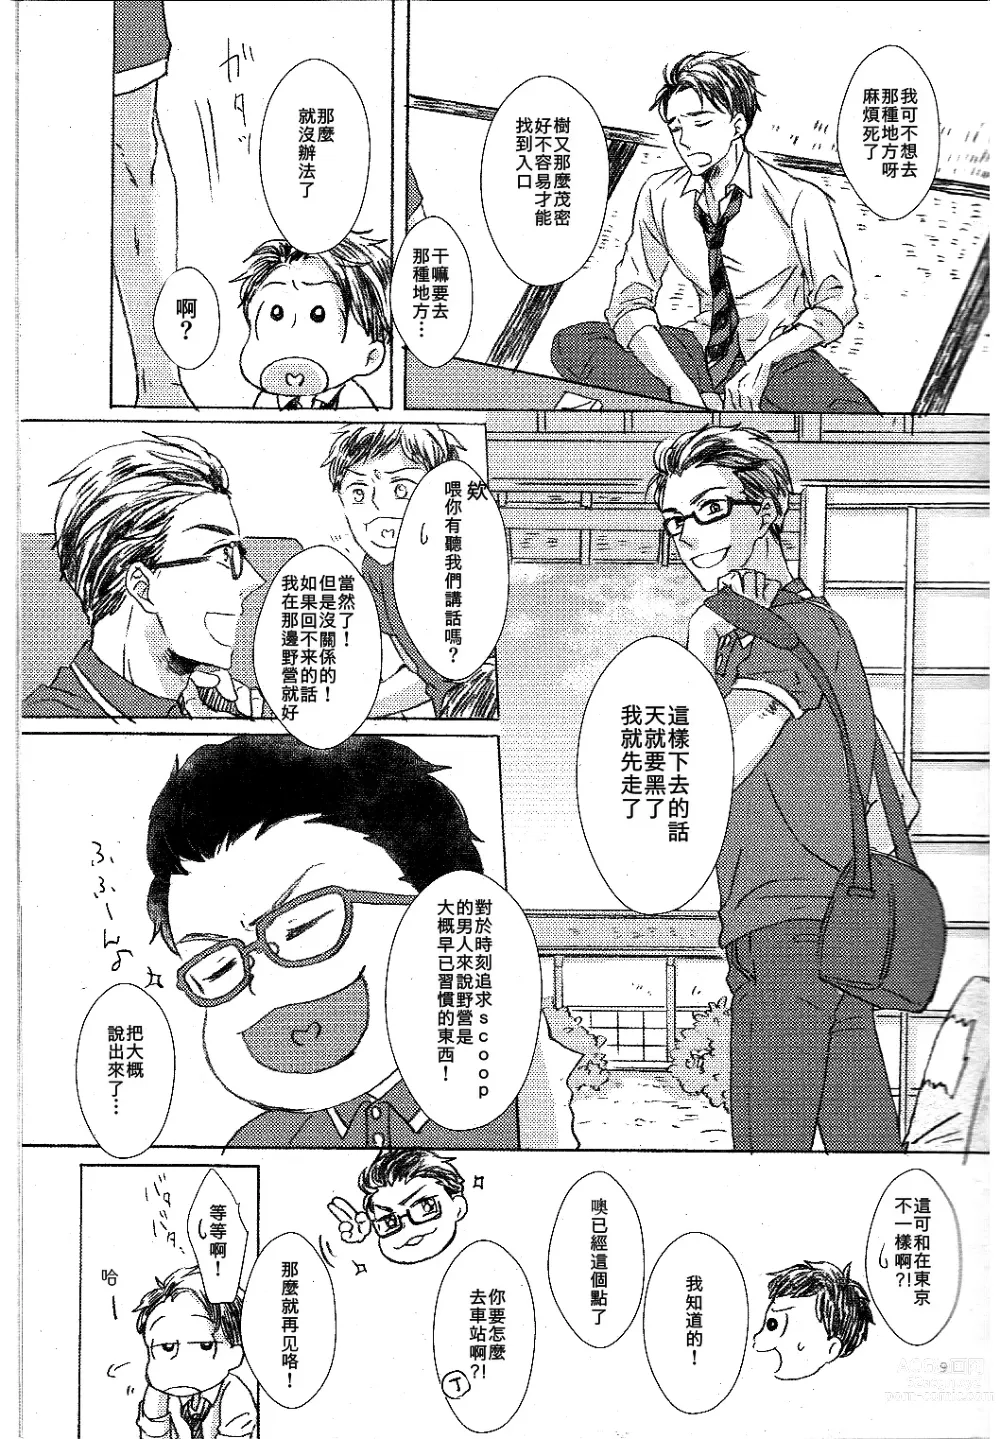 Page 7 of doujinshi Oni to Zaregoto